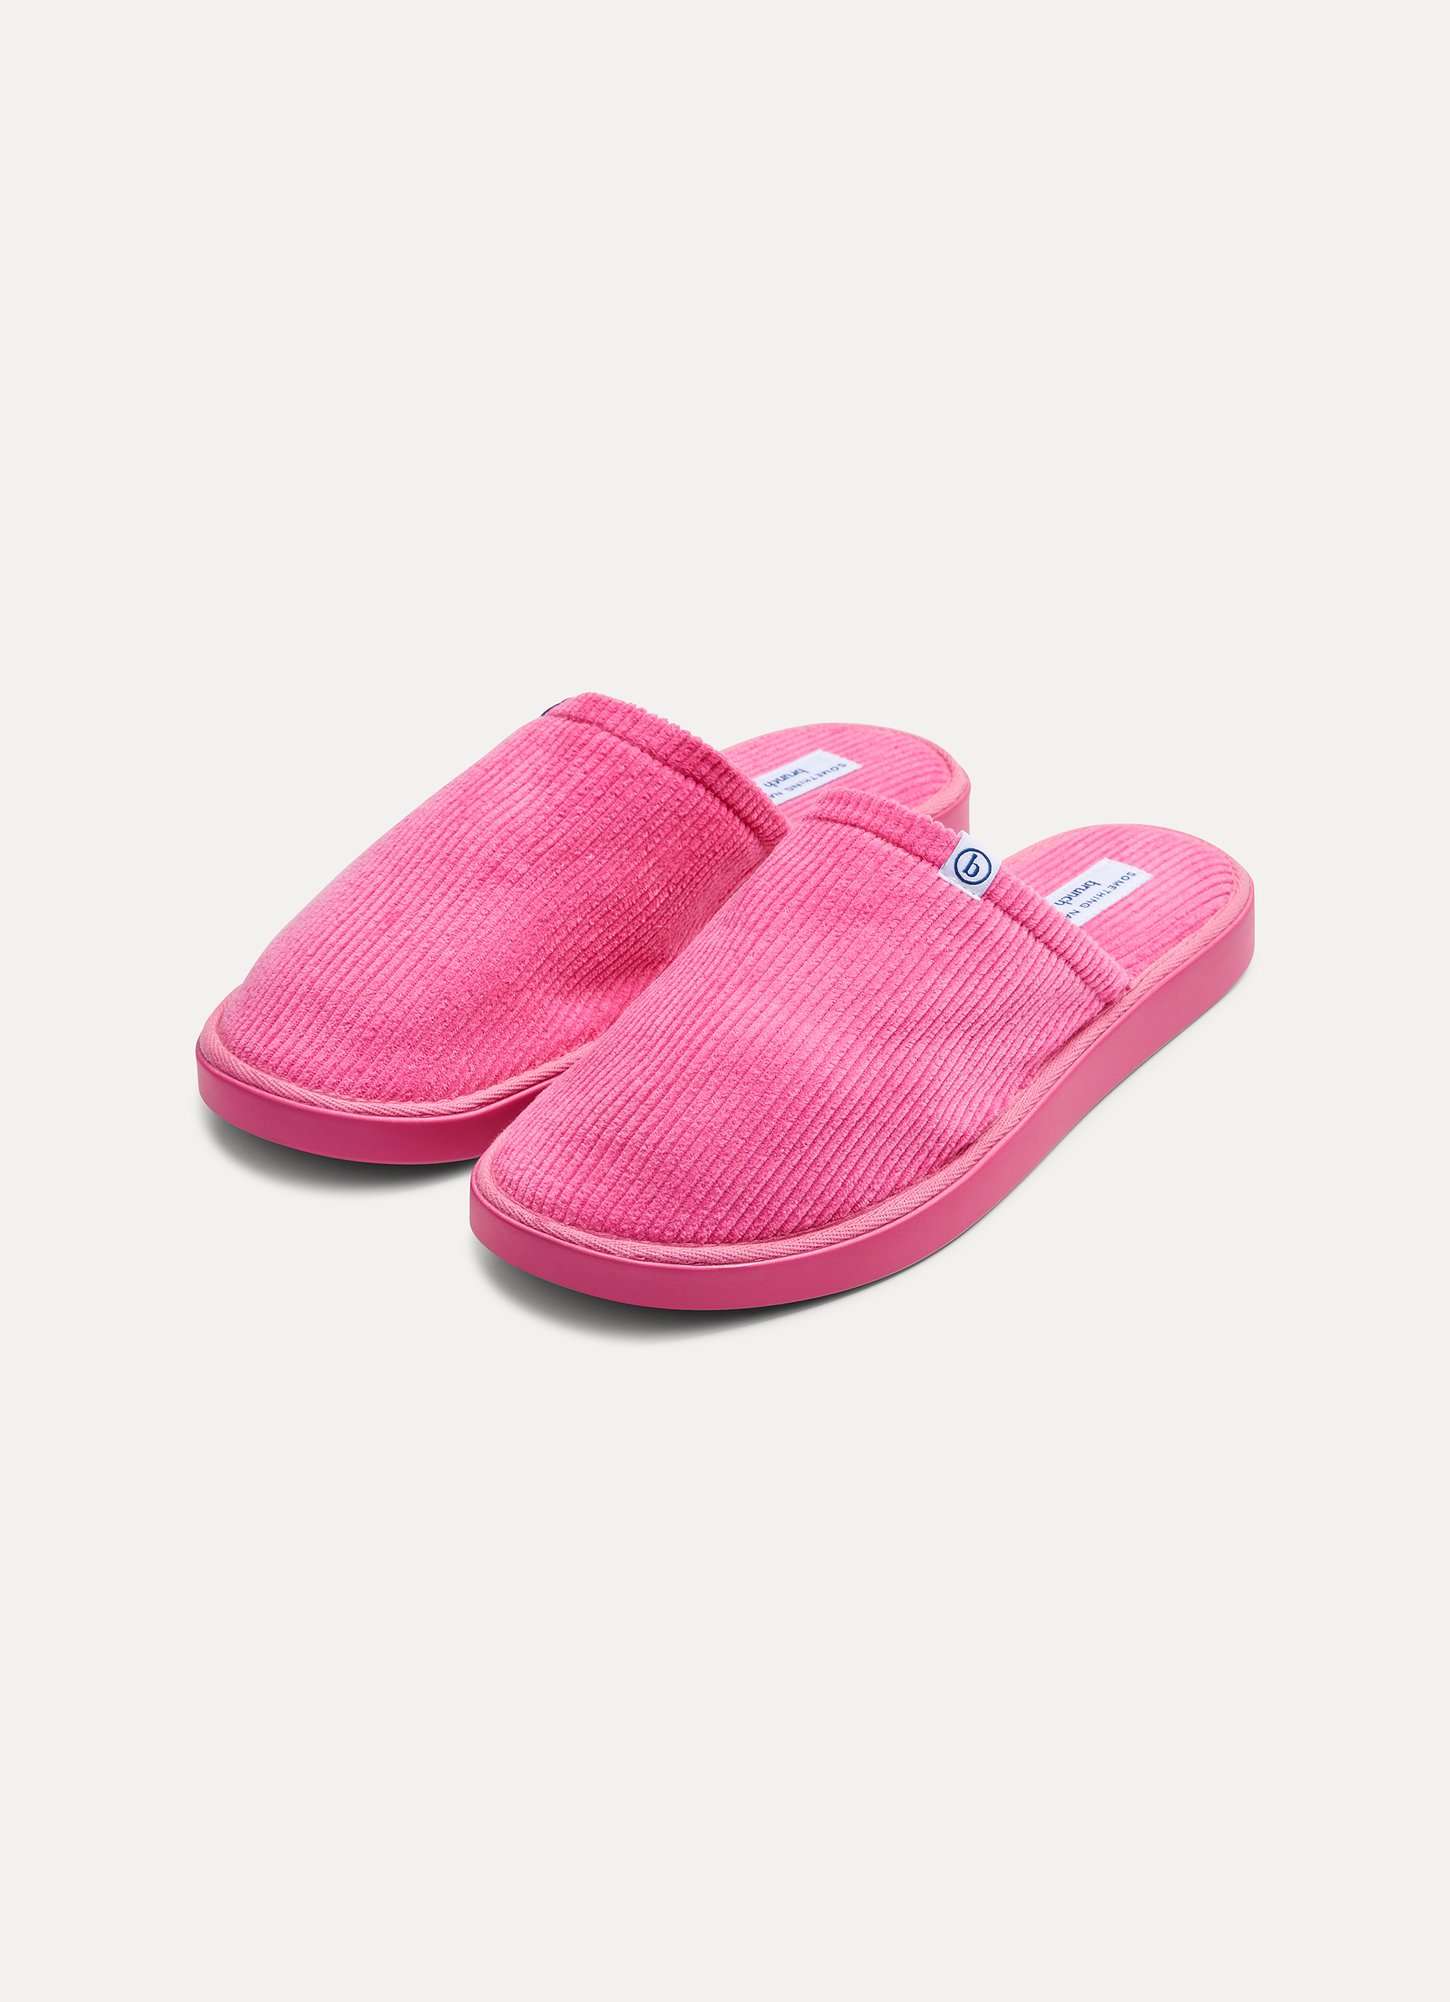 SN x Brunch Le Classic in Pink Corduroy slipper